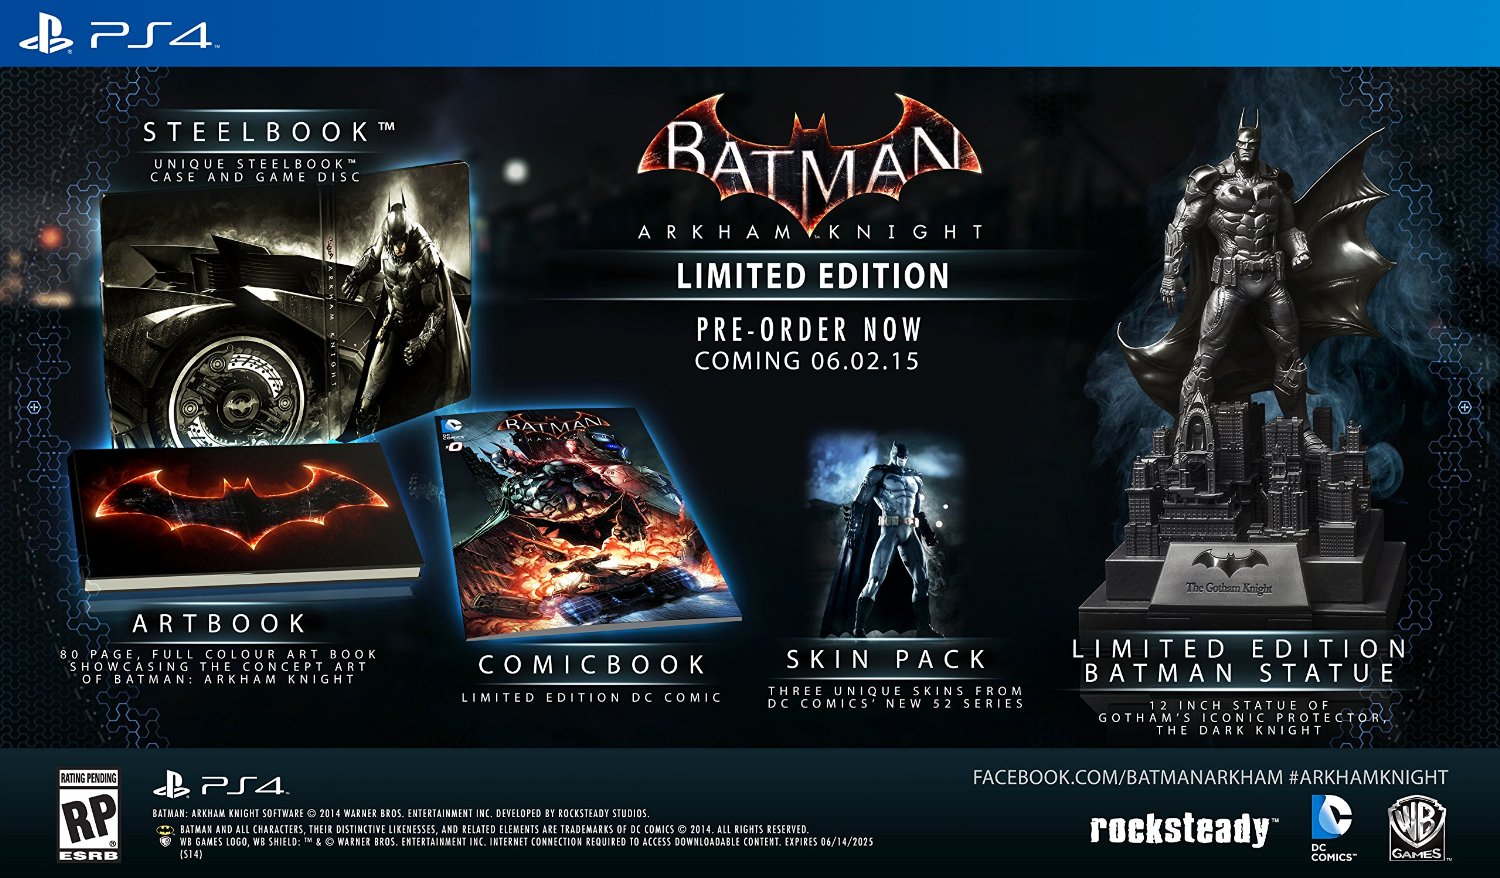 Batman: Arkham Knight Limited Edition contents